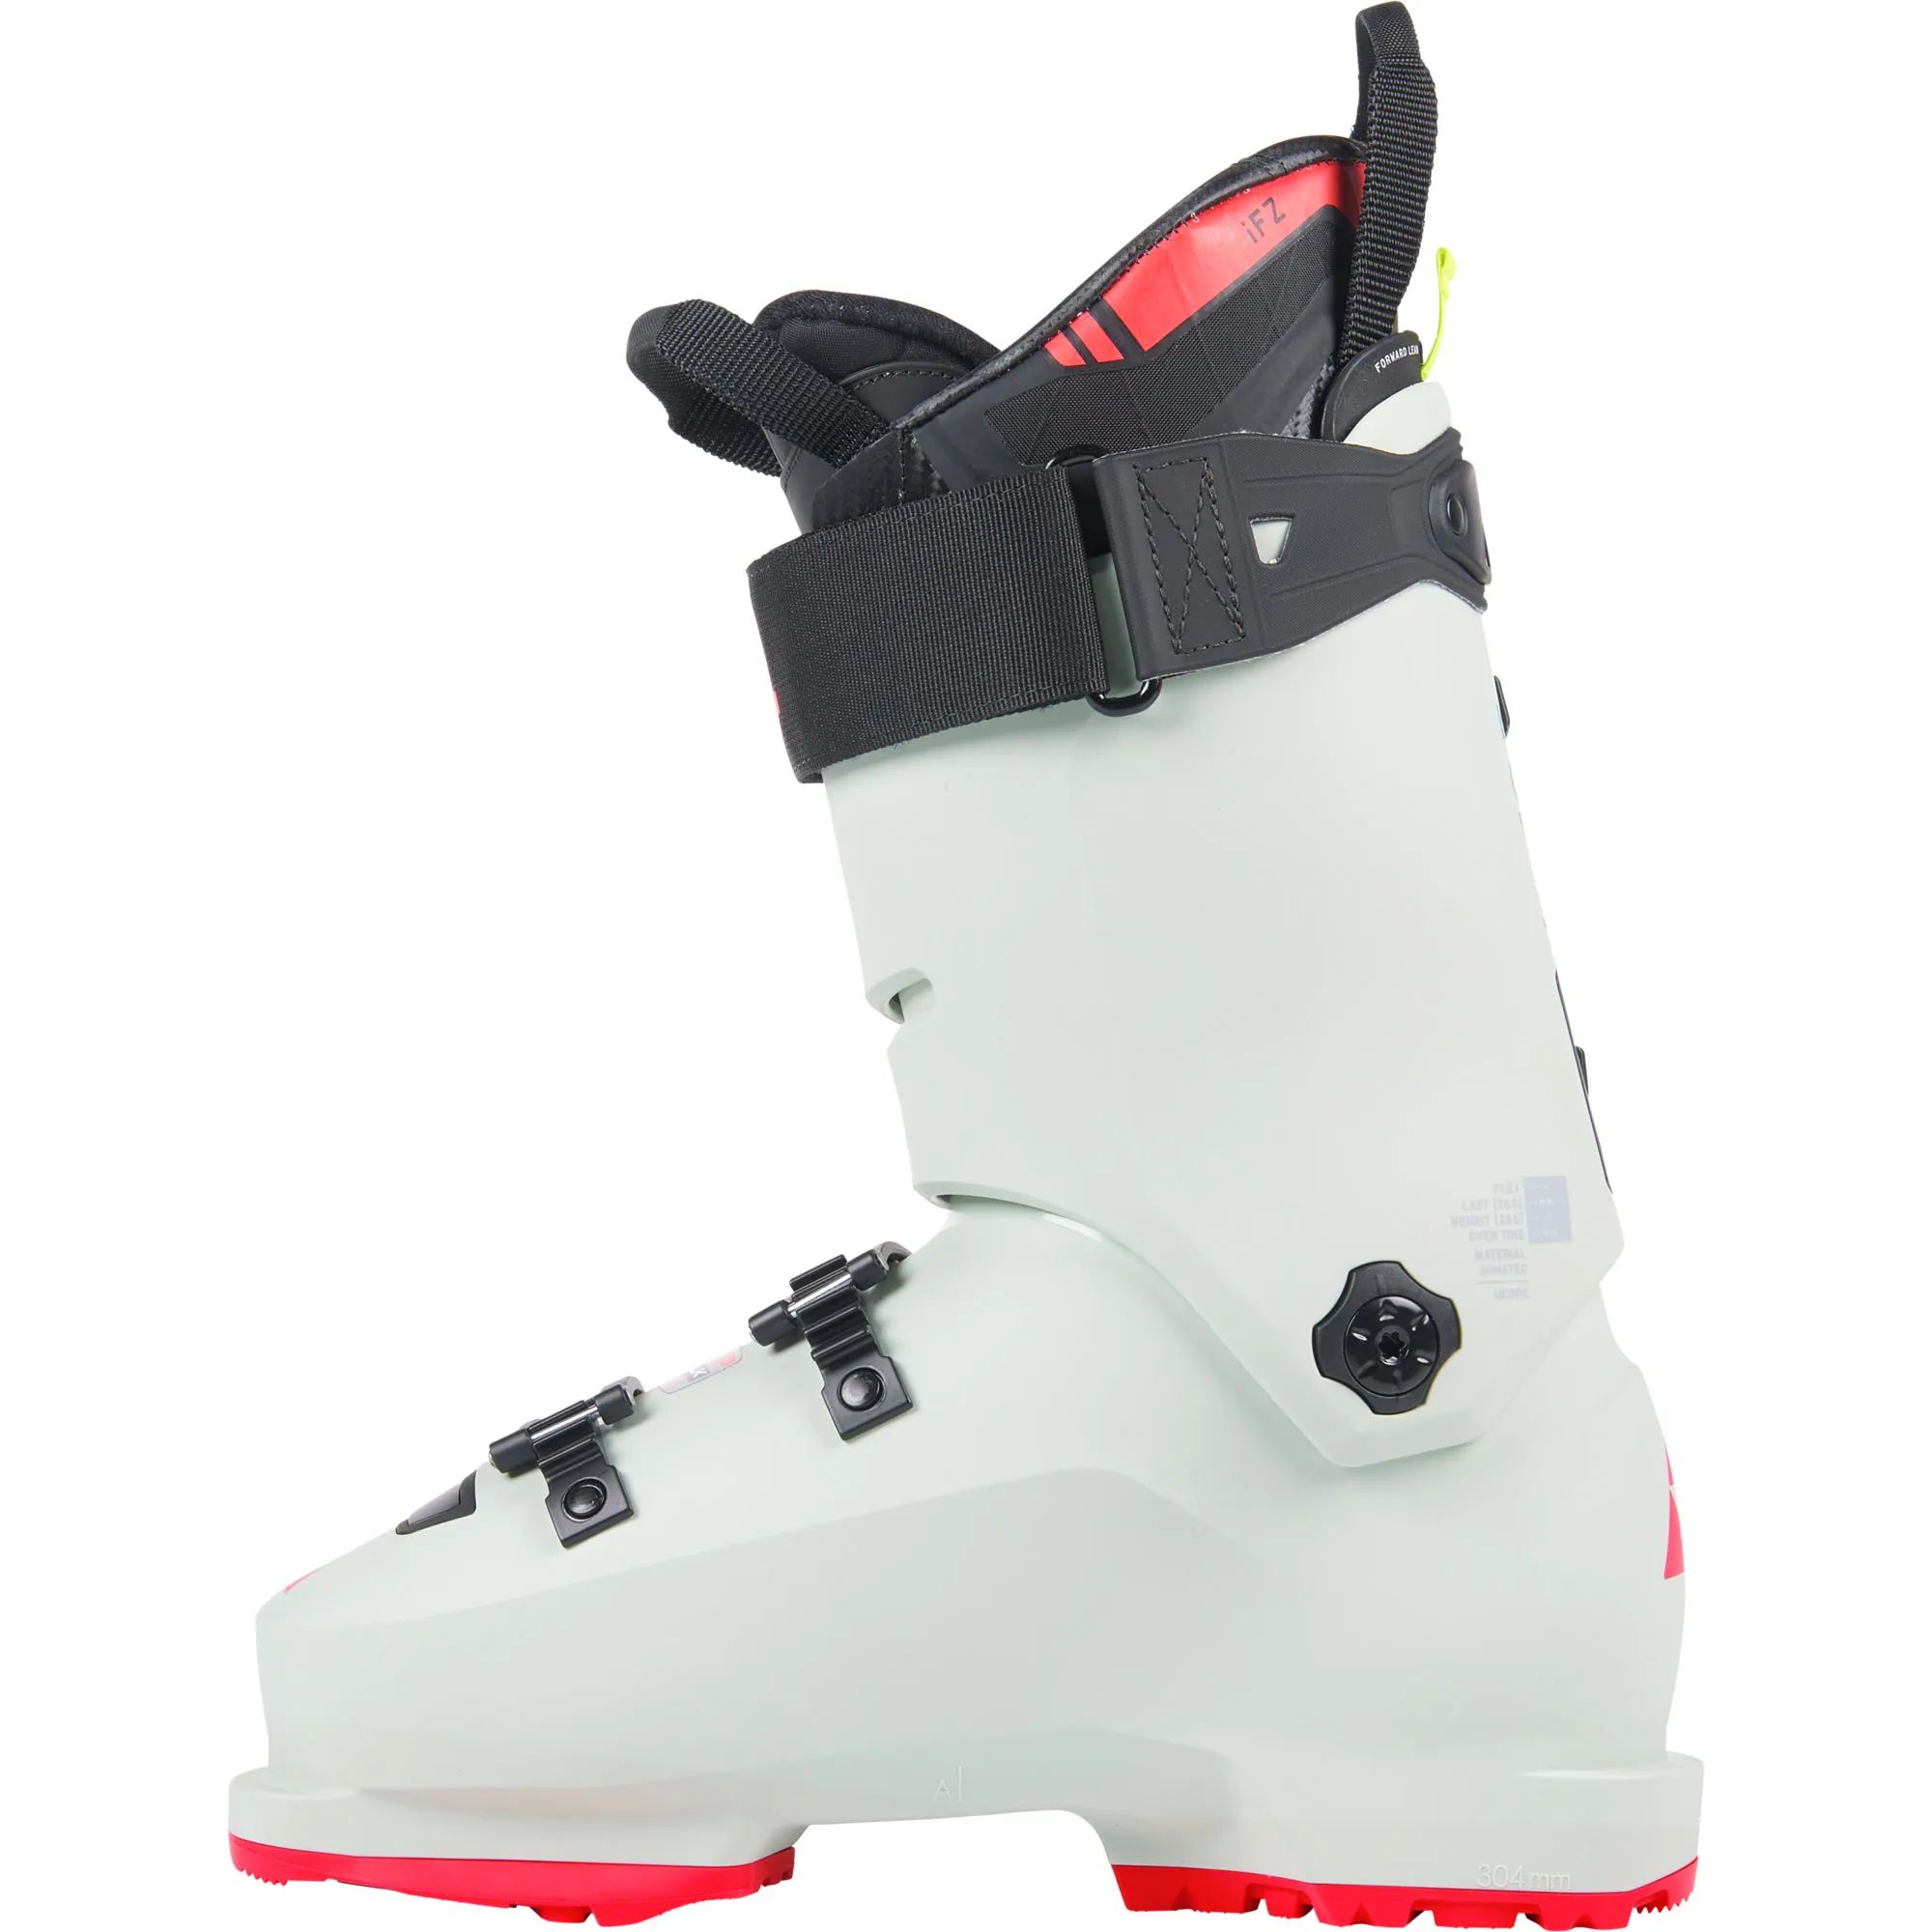 Ski Boots -  fischer The CURV GT 105 VAC GW